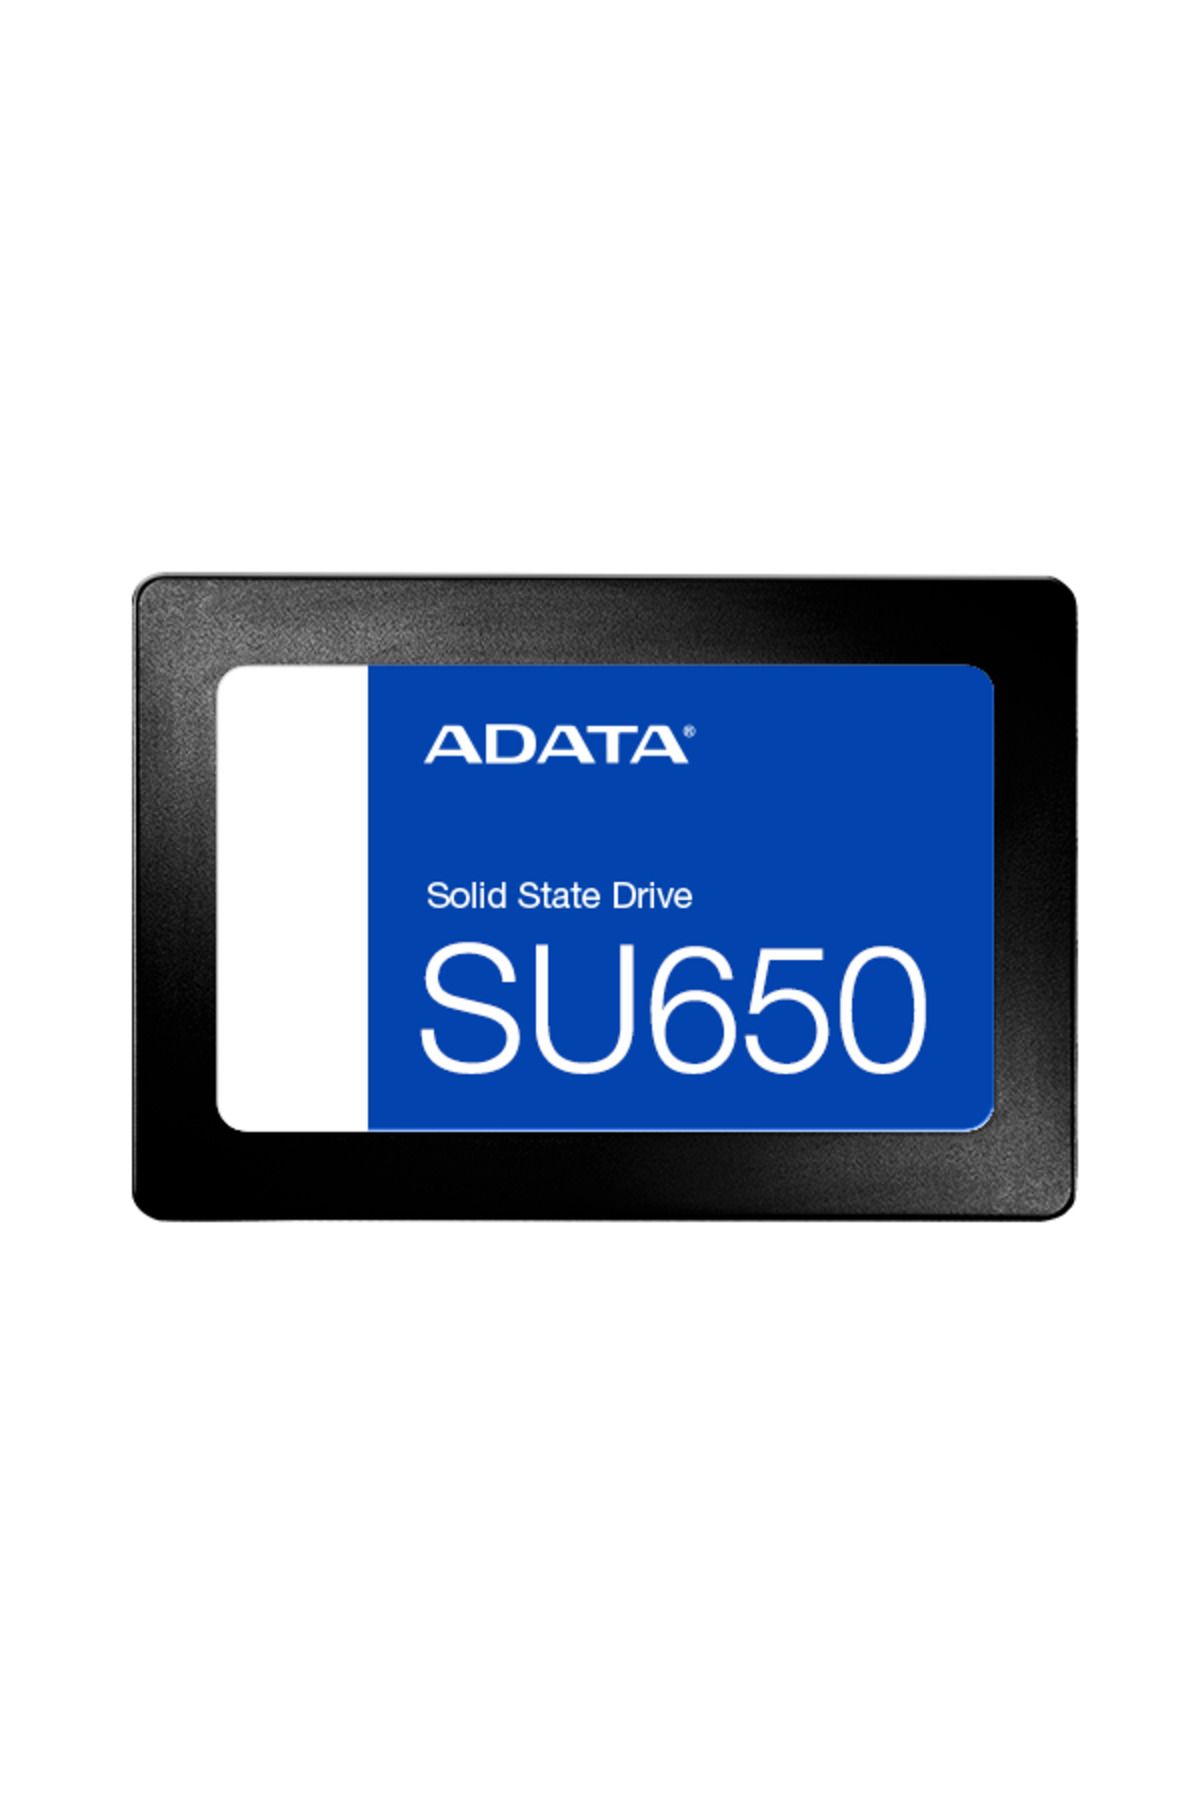 Adata 480GB 2.5" SU650 520-450MB-s ASU650SS-480GT-R Ssd Harddisk